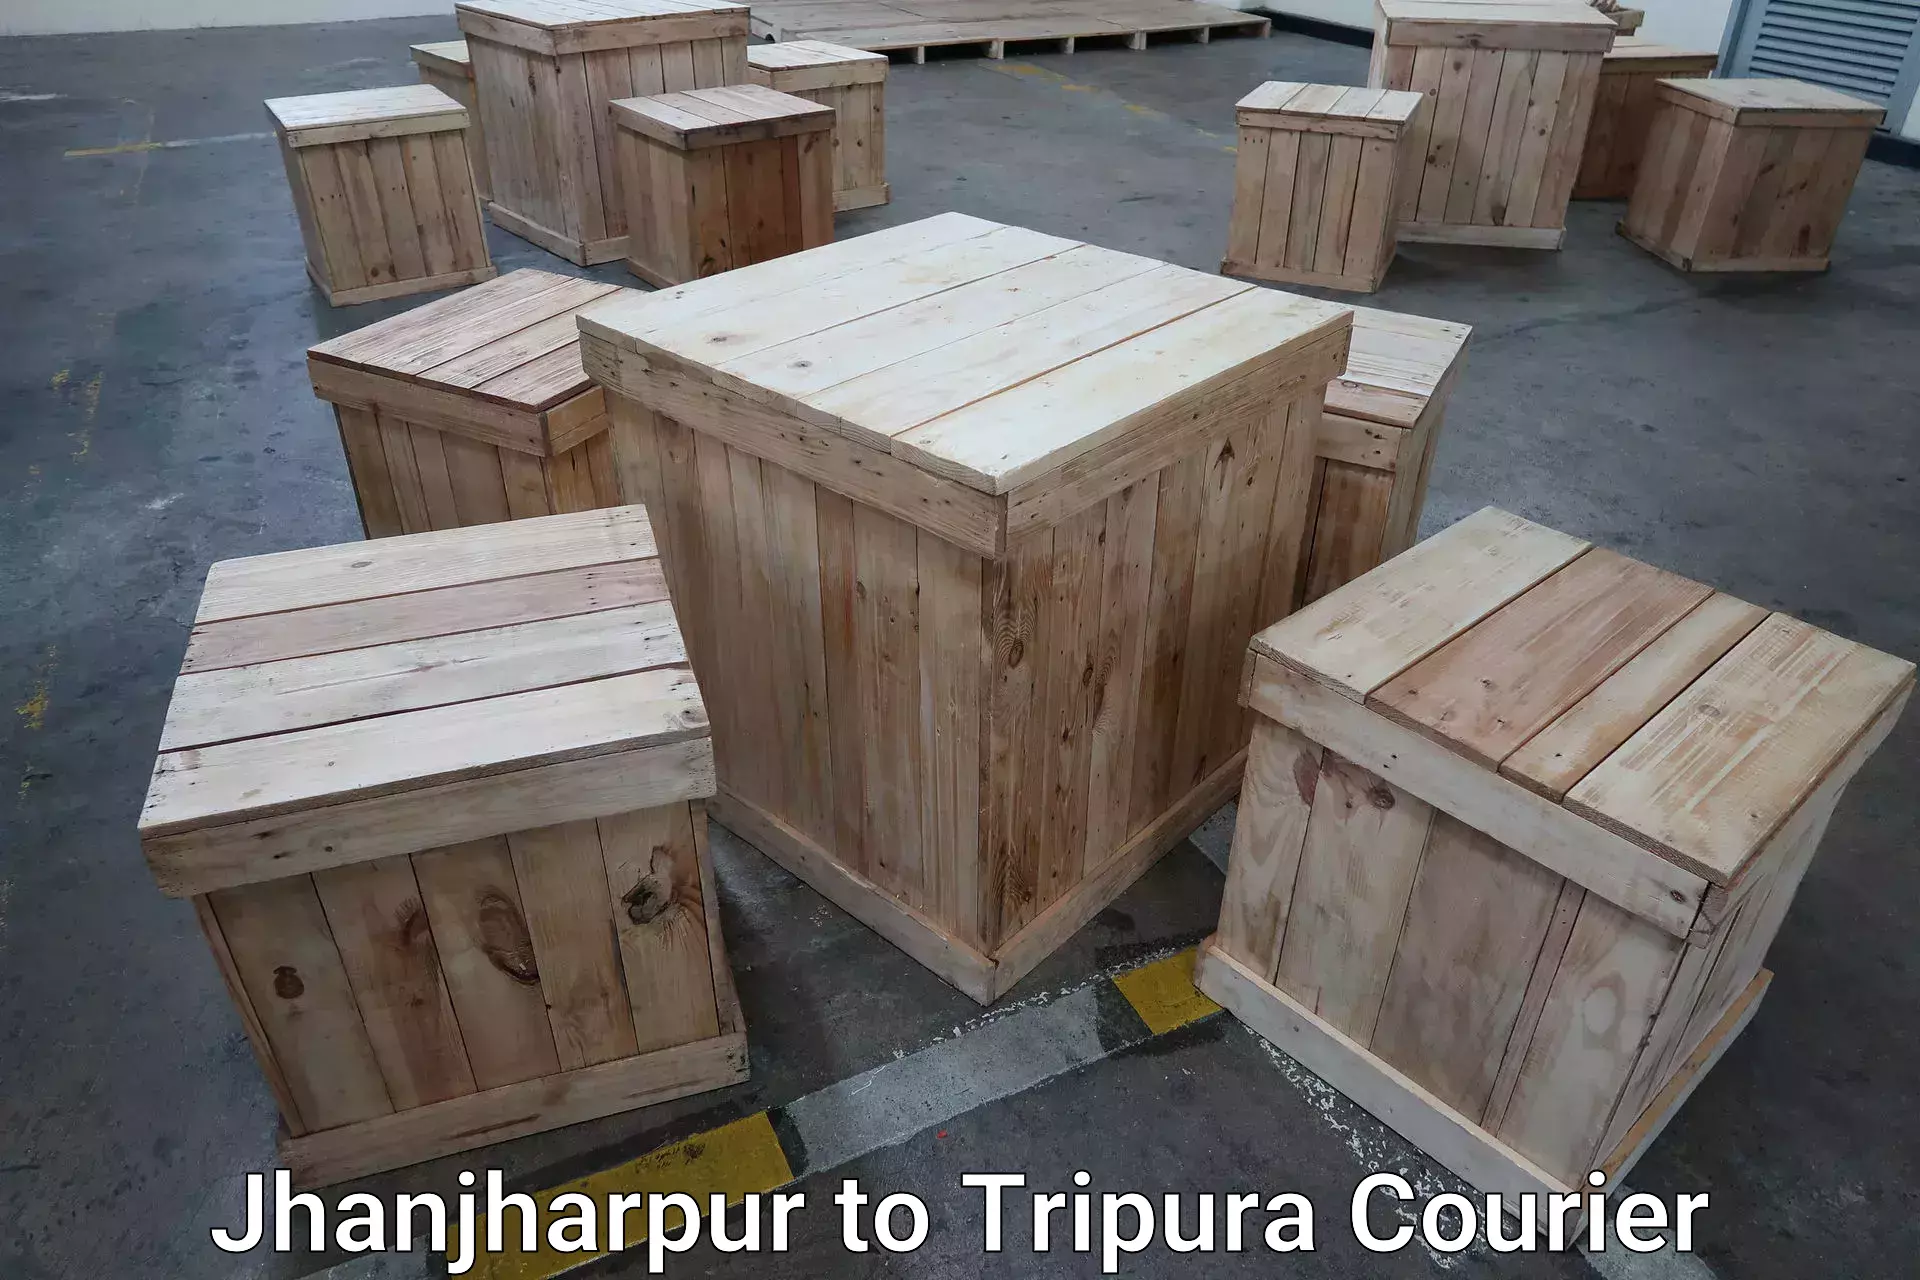 Luggage shipment specialists Jhanjharpur to Udaipur Tripura